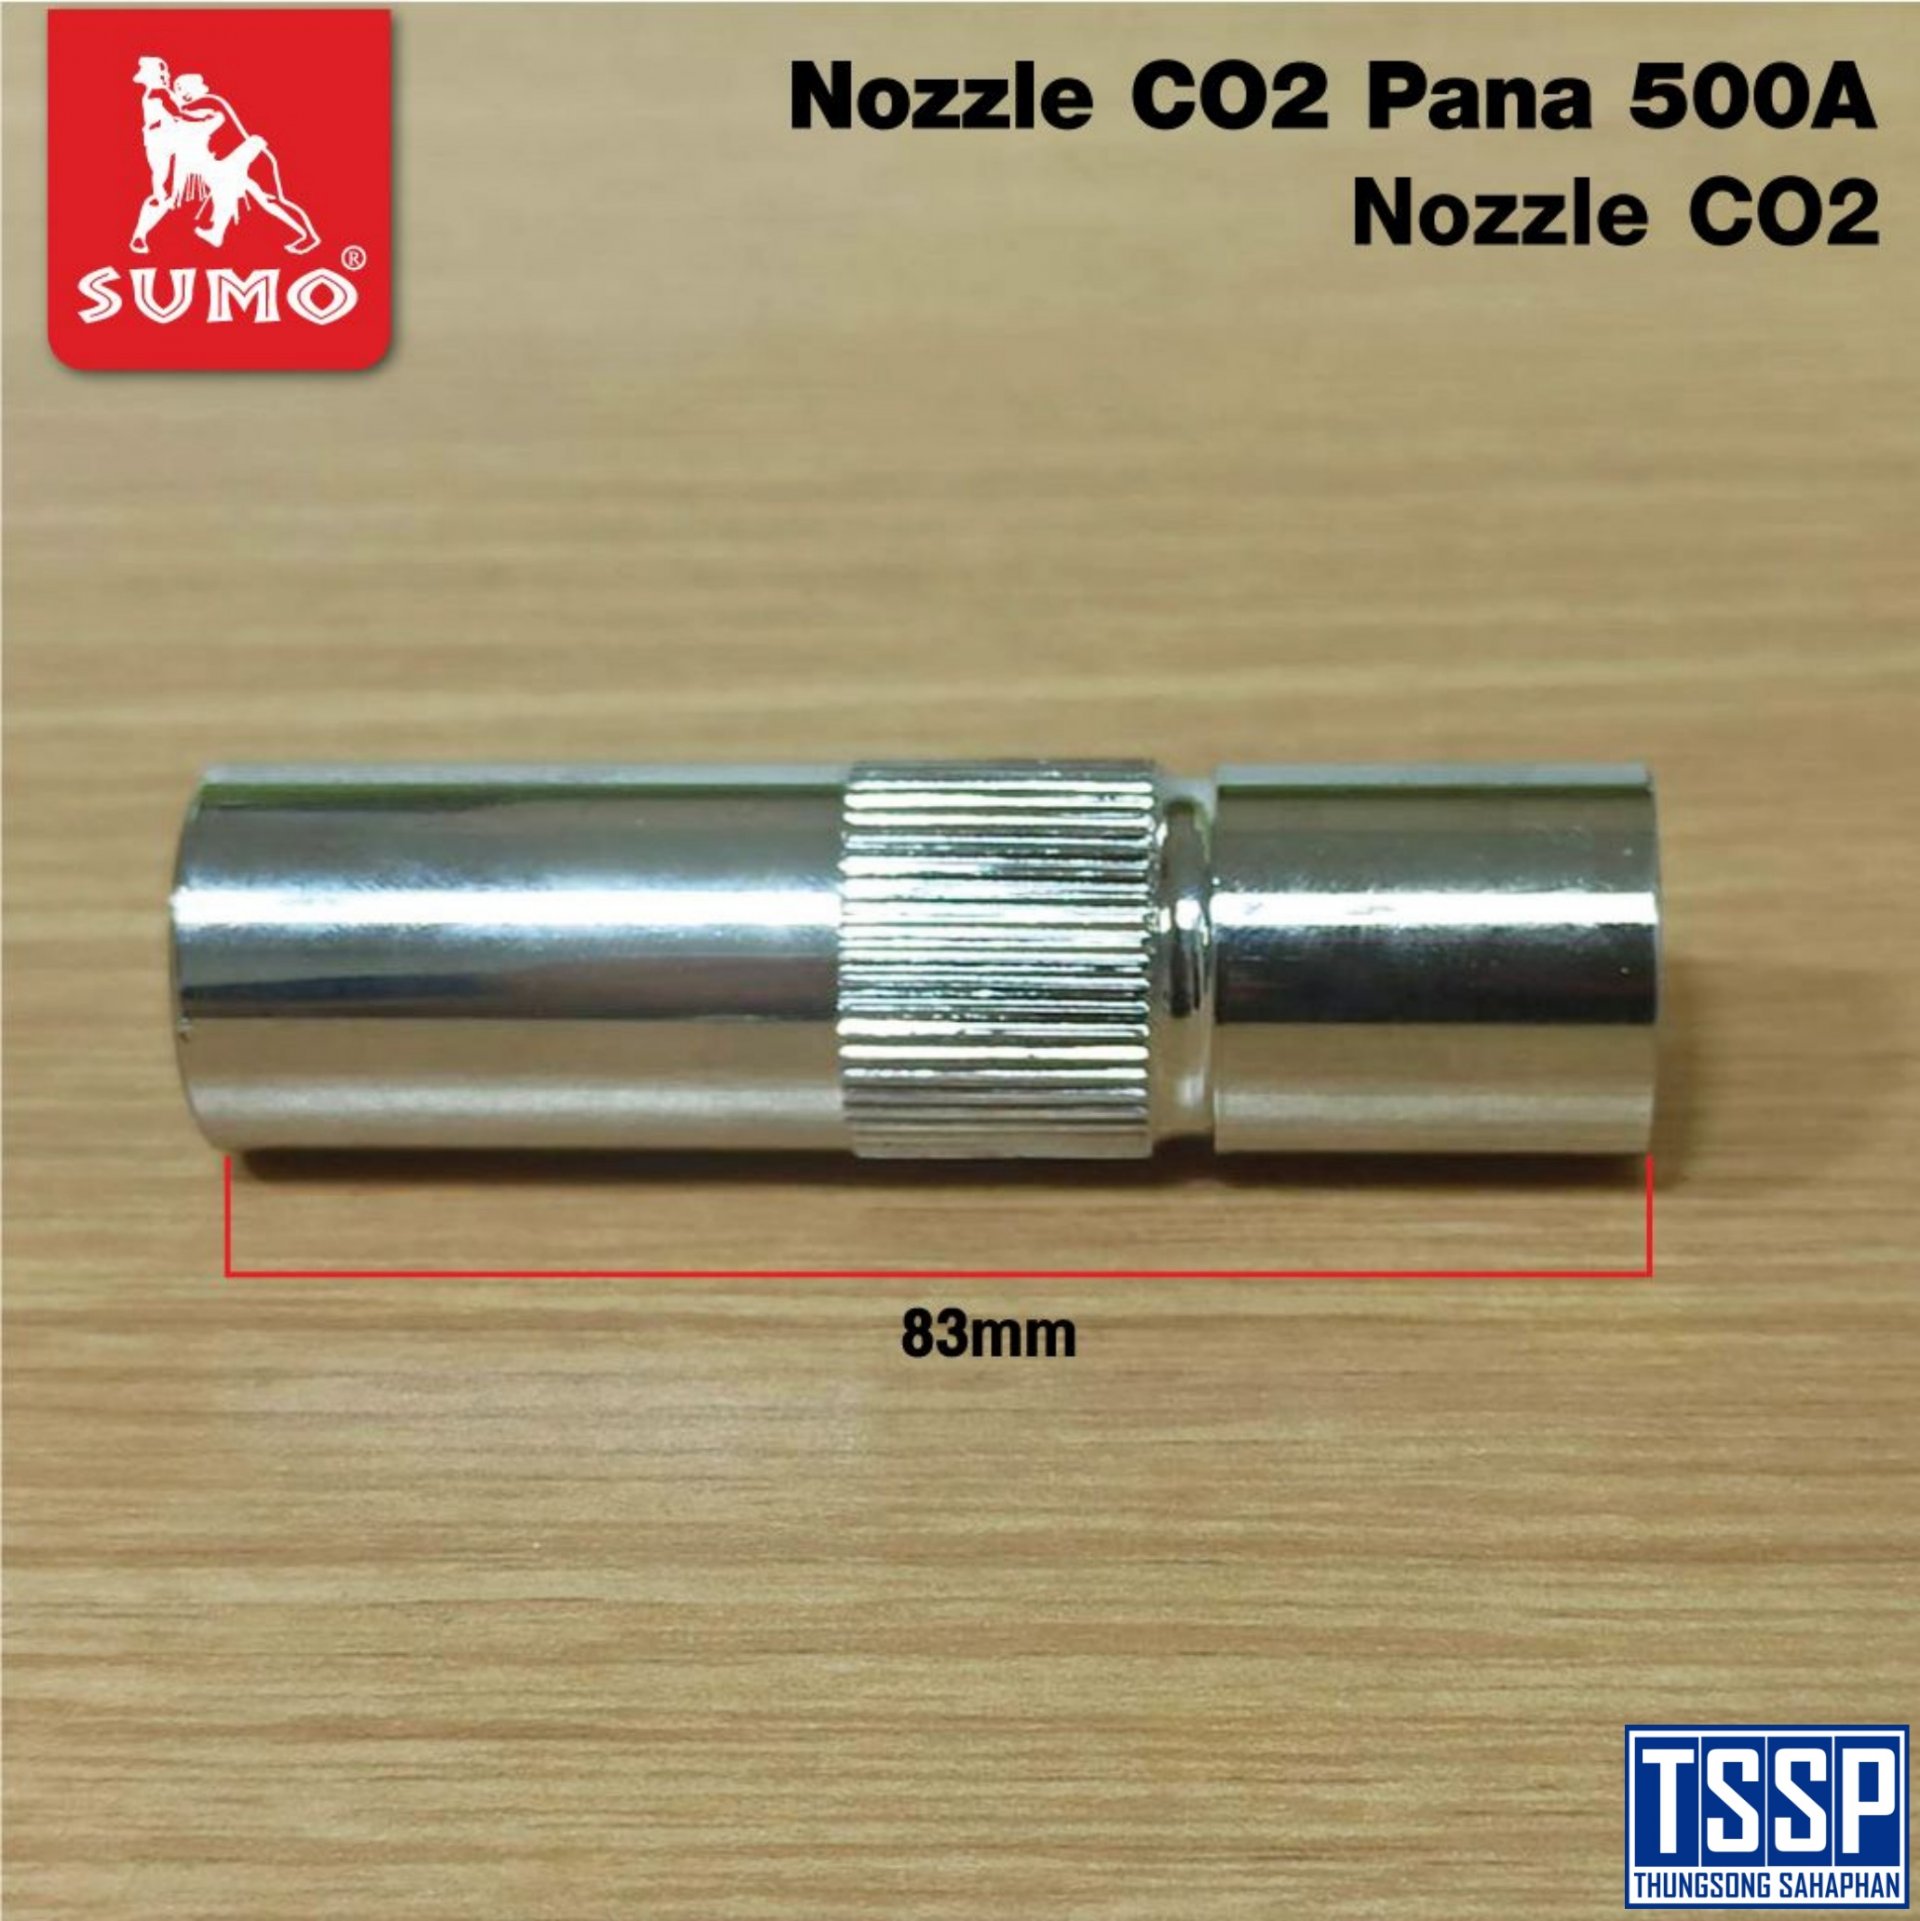 Nozzle CO2 PANA 500A